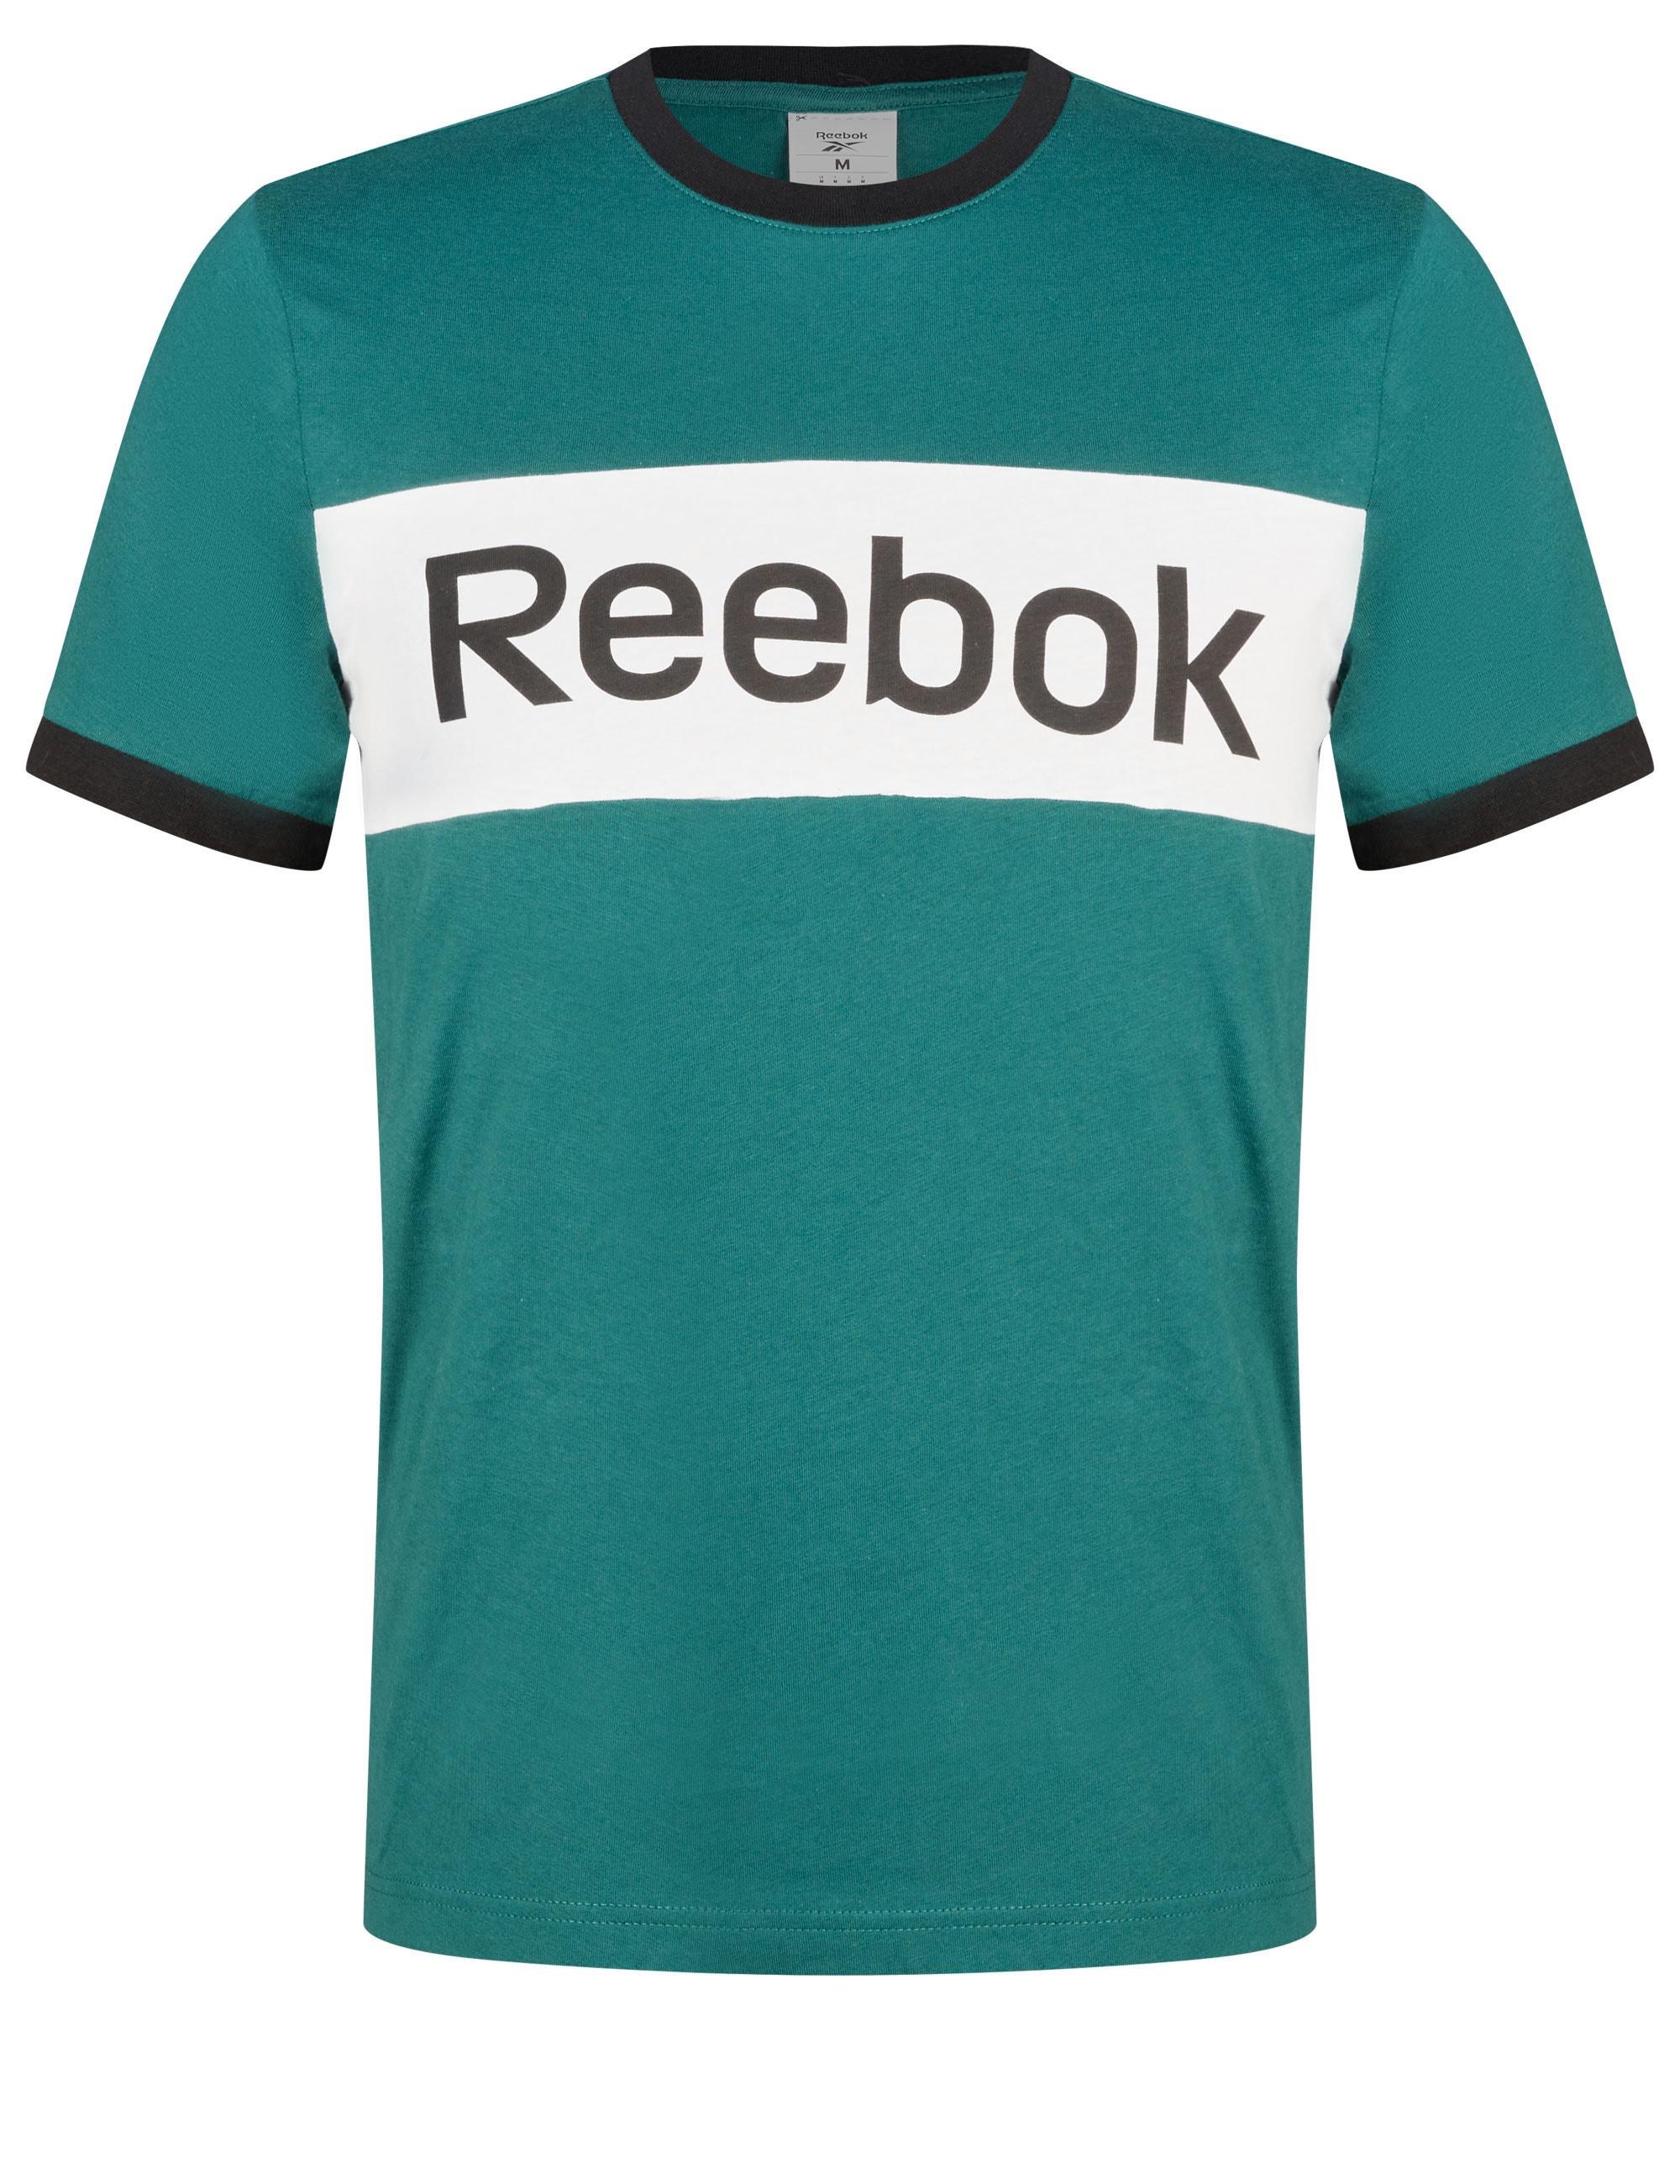 Reebok - Mens Winter Tops - Green Tshirt / Tee - Cotton - Graphic - Smart Casual - Teal - Short Sleeve - Crew Neck - Long - Office Fashion - Work Wear